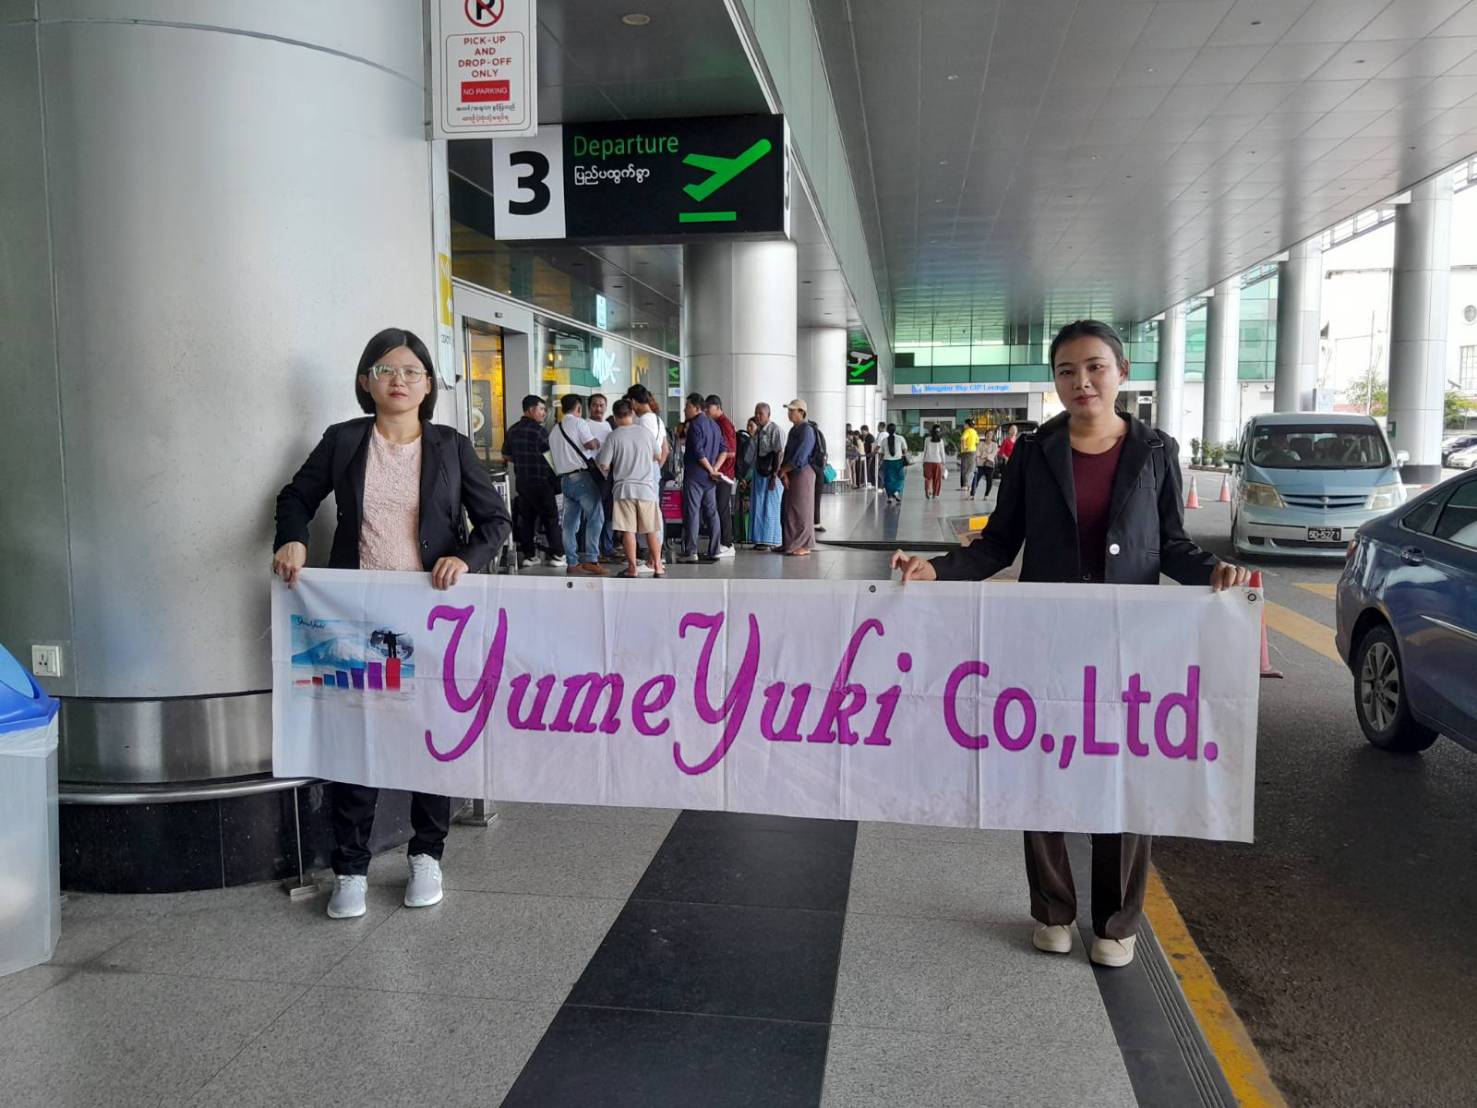 yumeyuki student go to japan with work visa